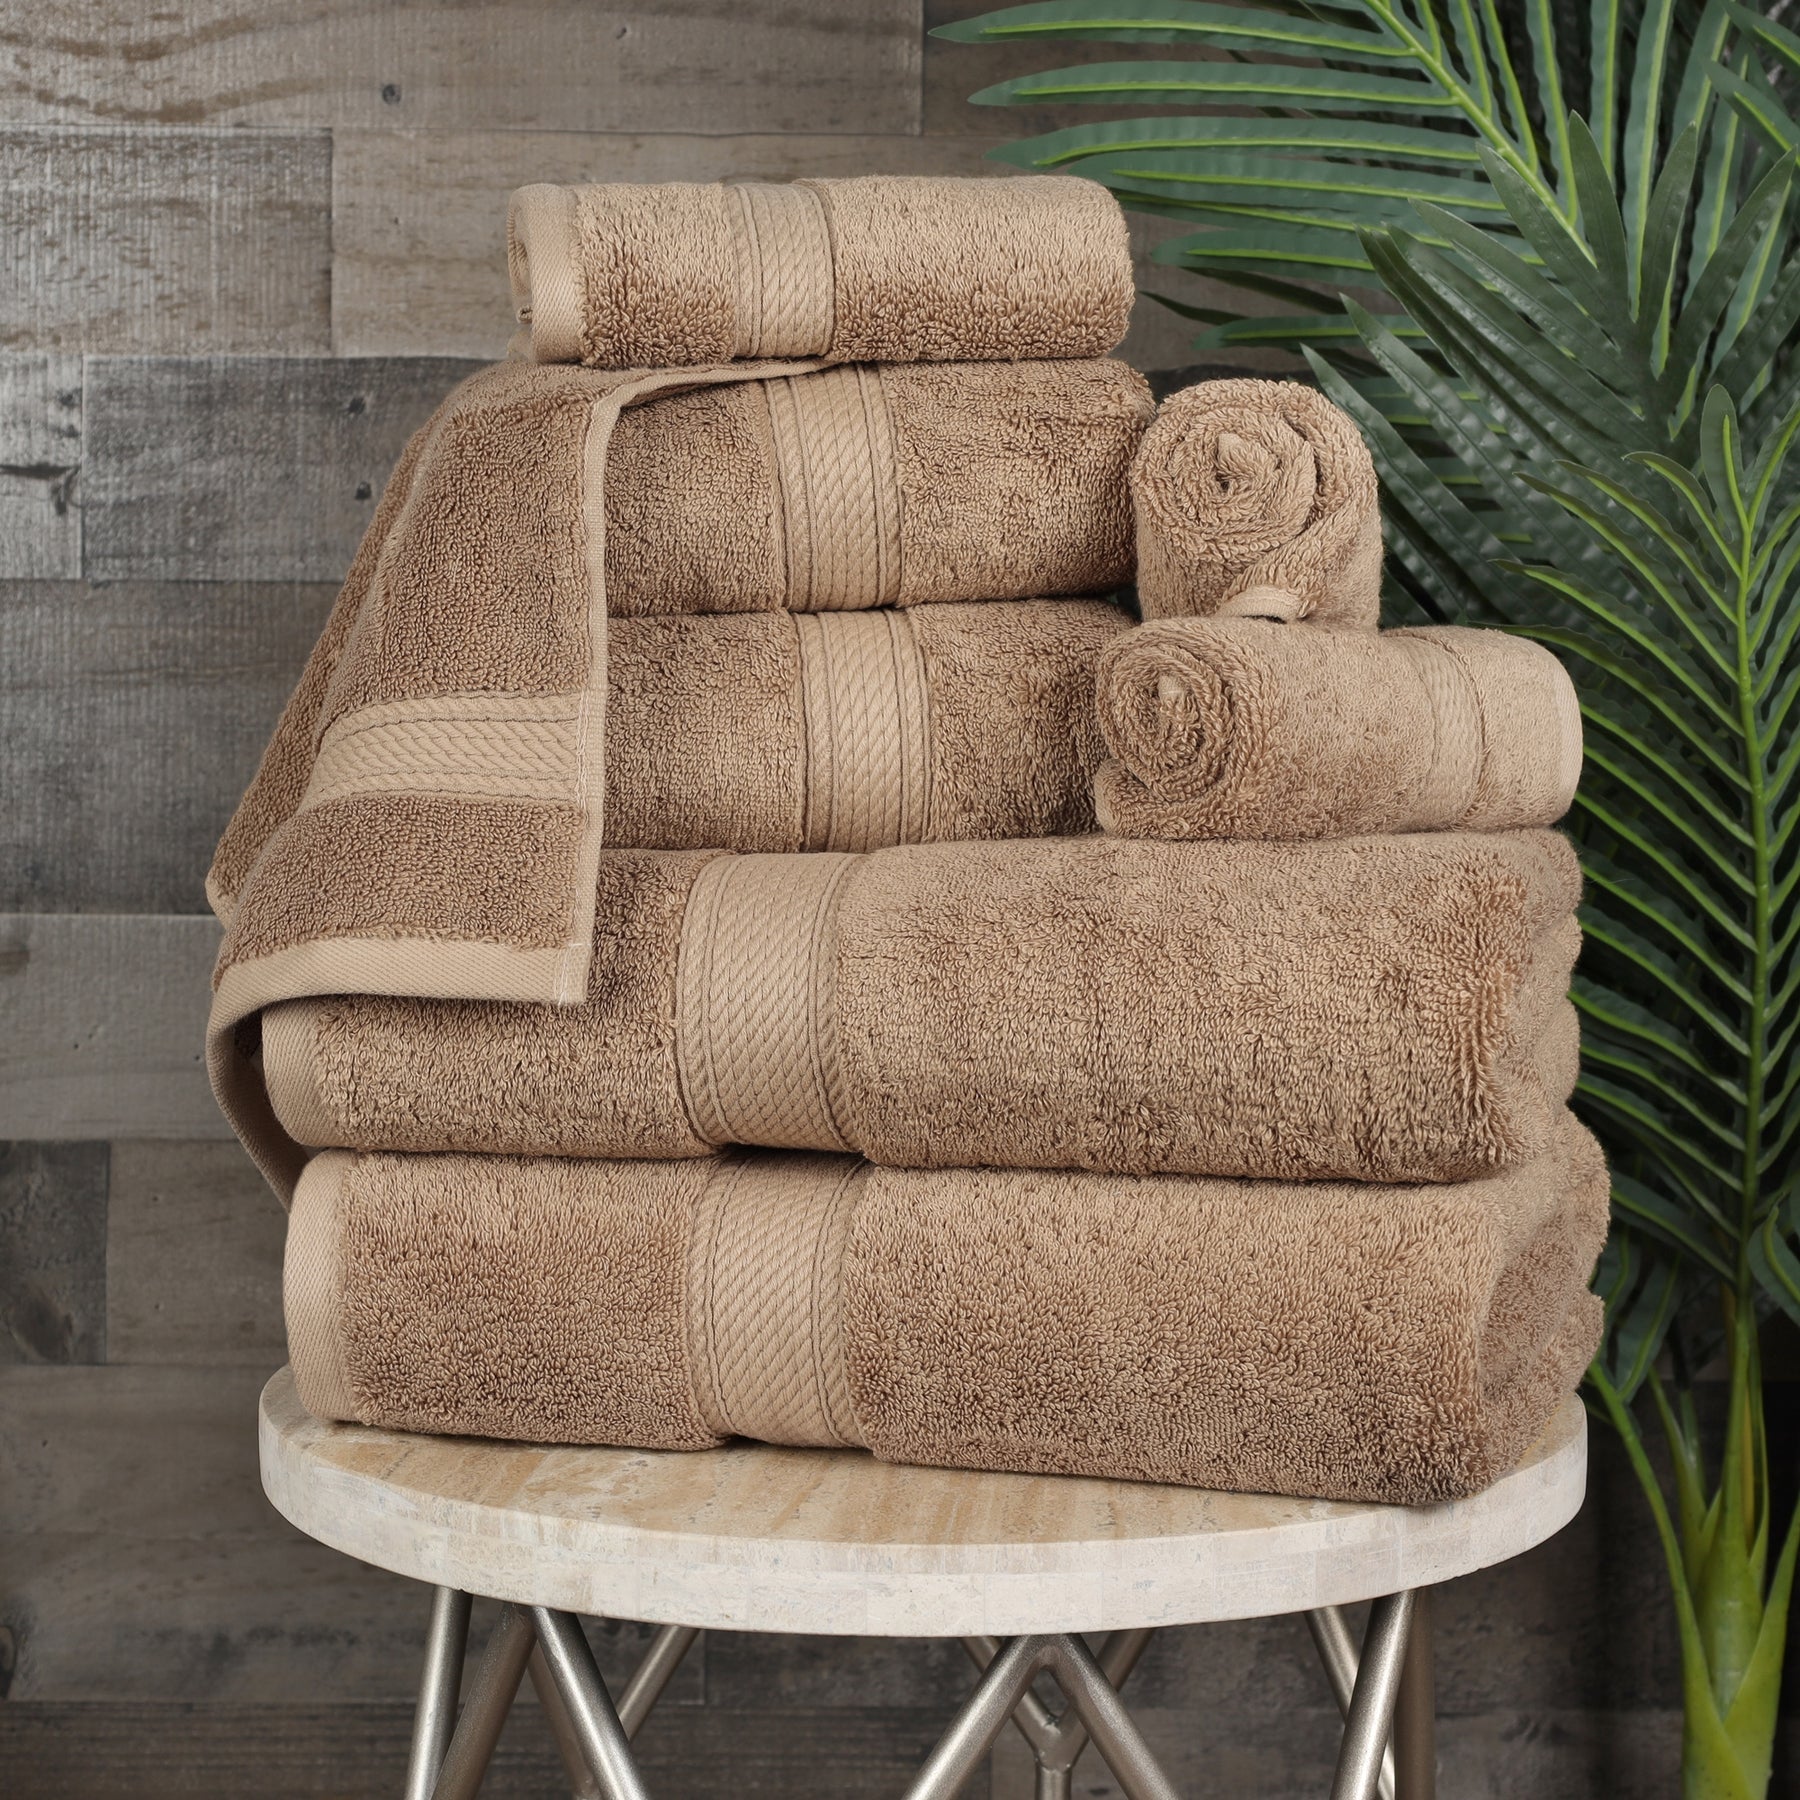 Egyptian Cotton 900 GSM Hotel Quality 2-Piece Bath Towel Set Latte, Brown